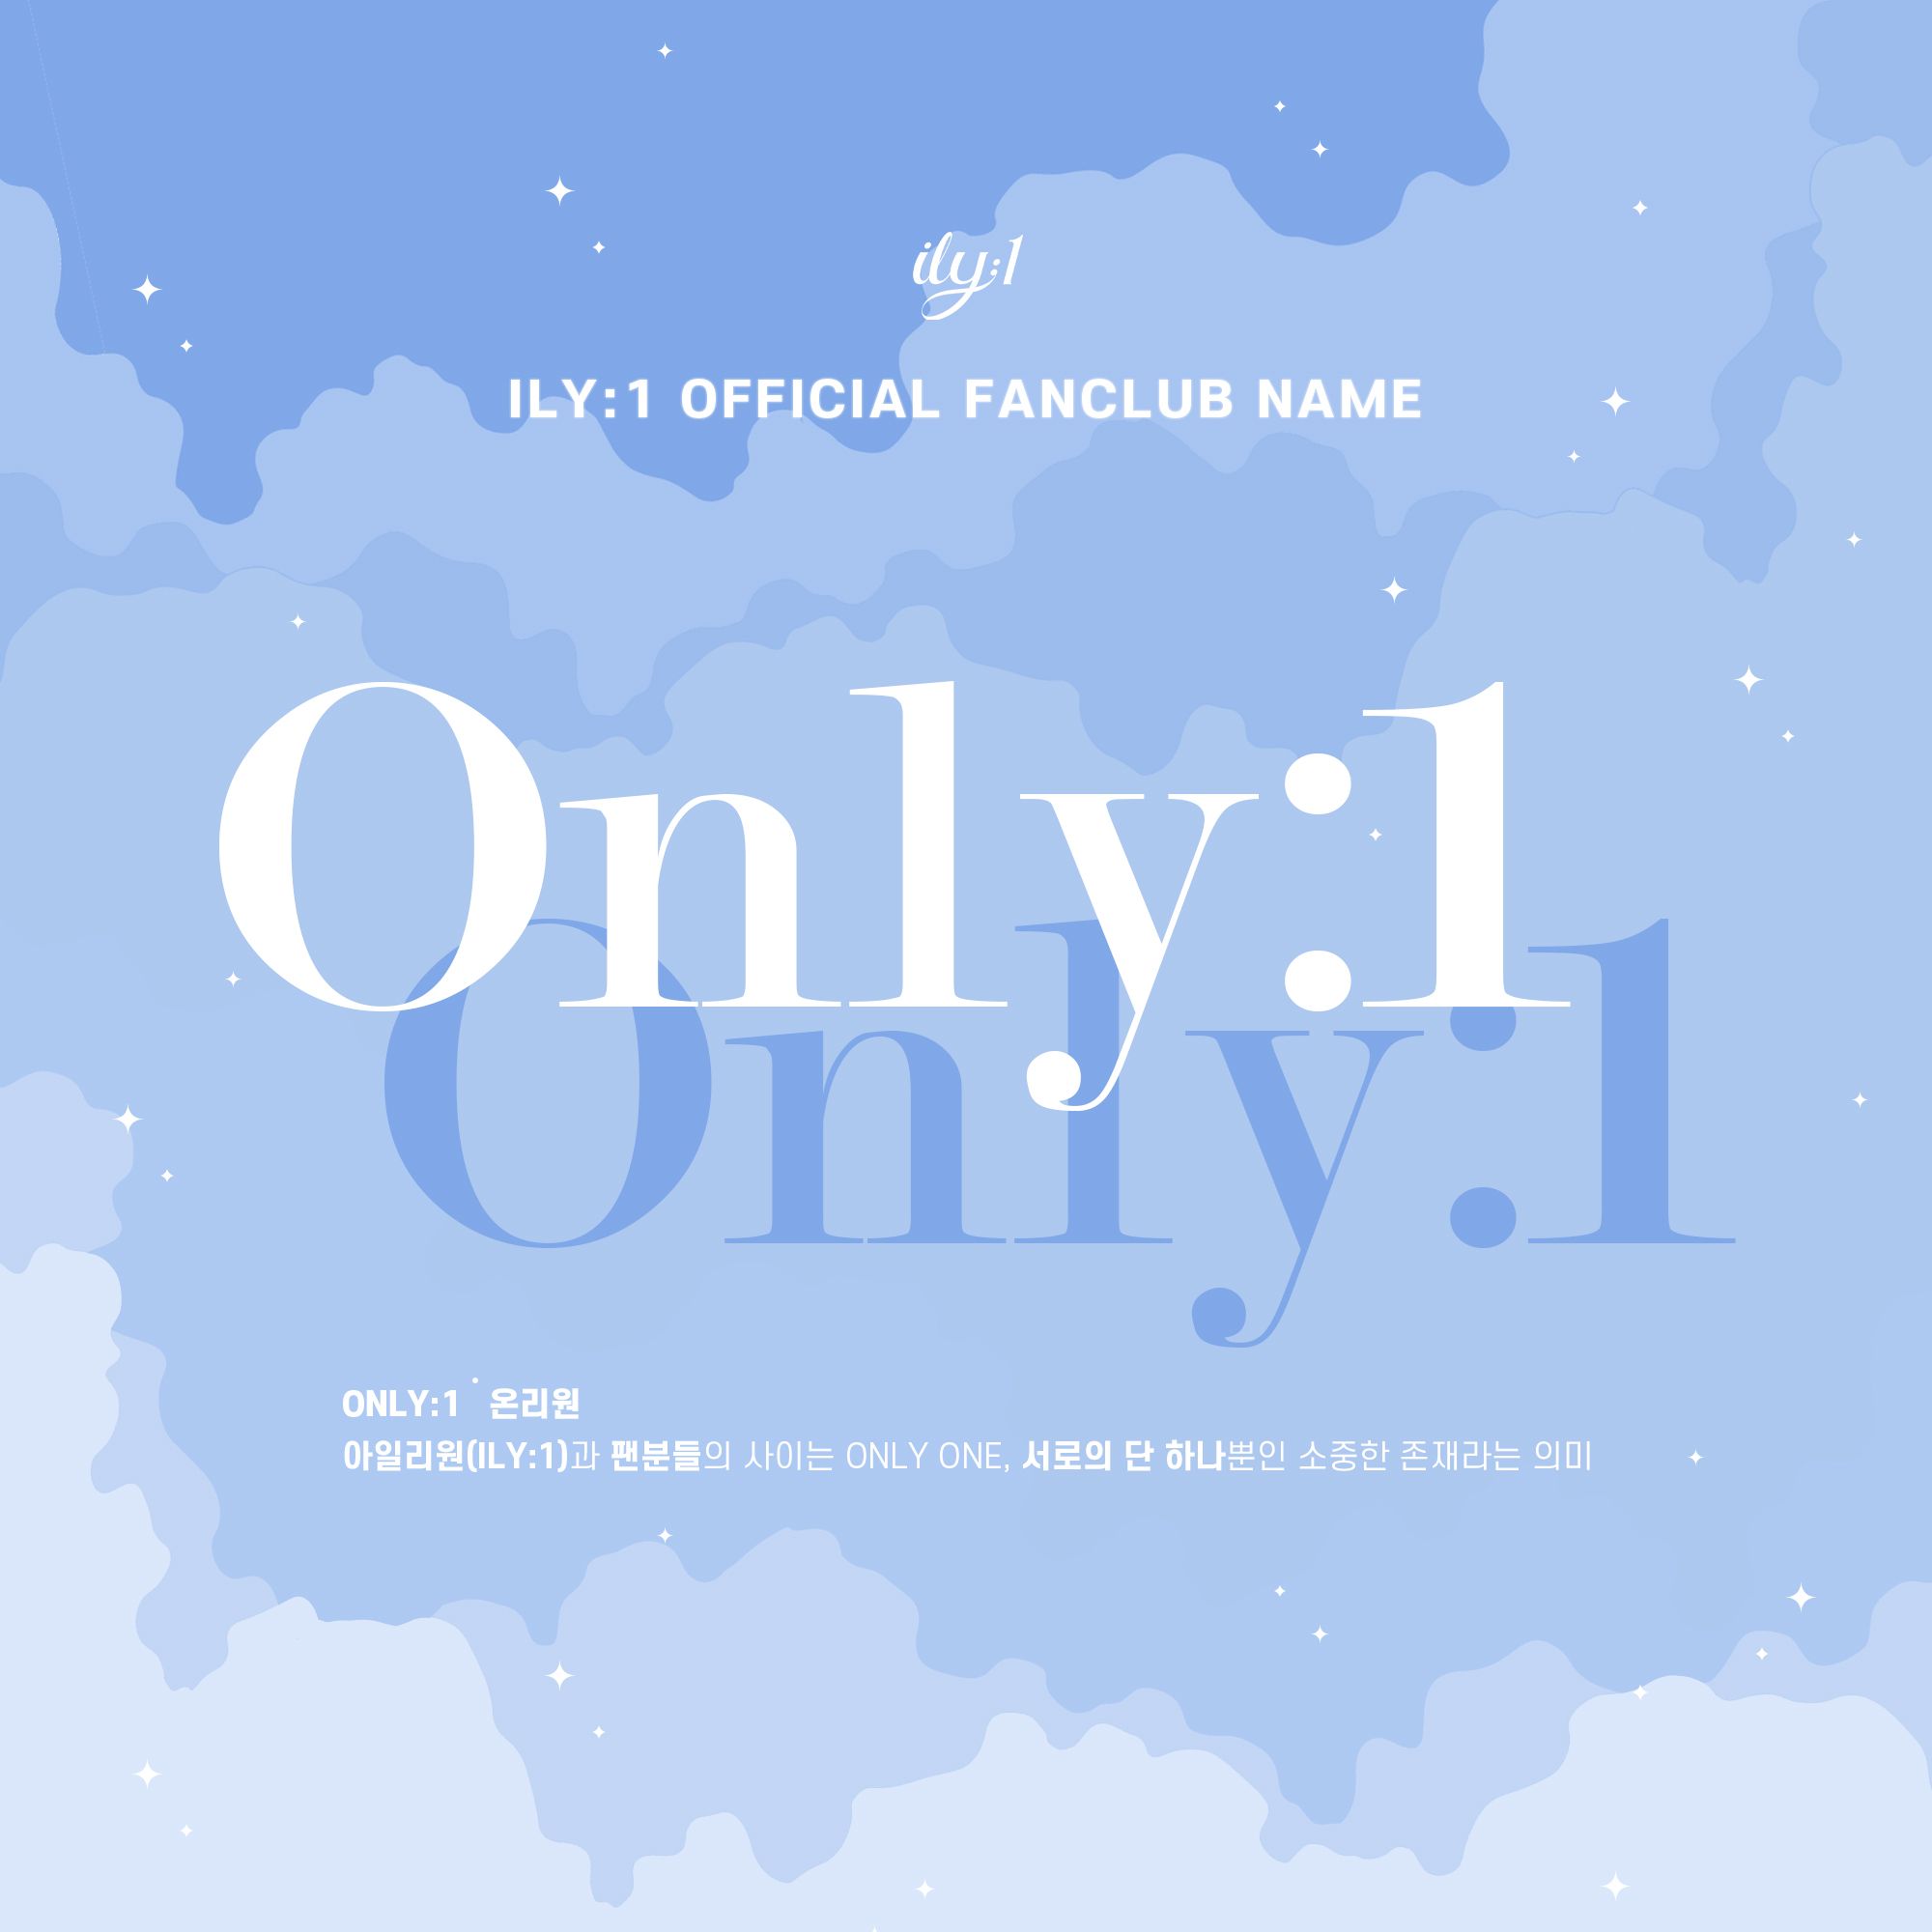 Nama fan club resmi ILY:1, 'Only:1'.